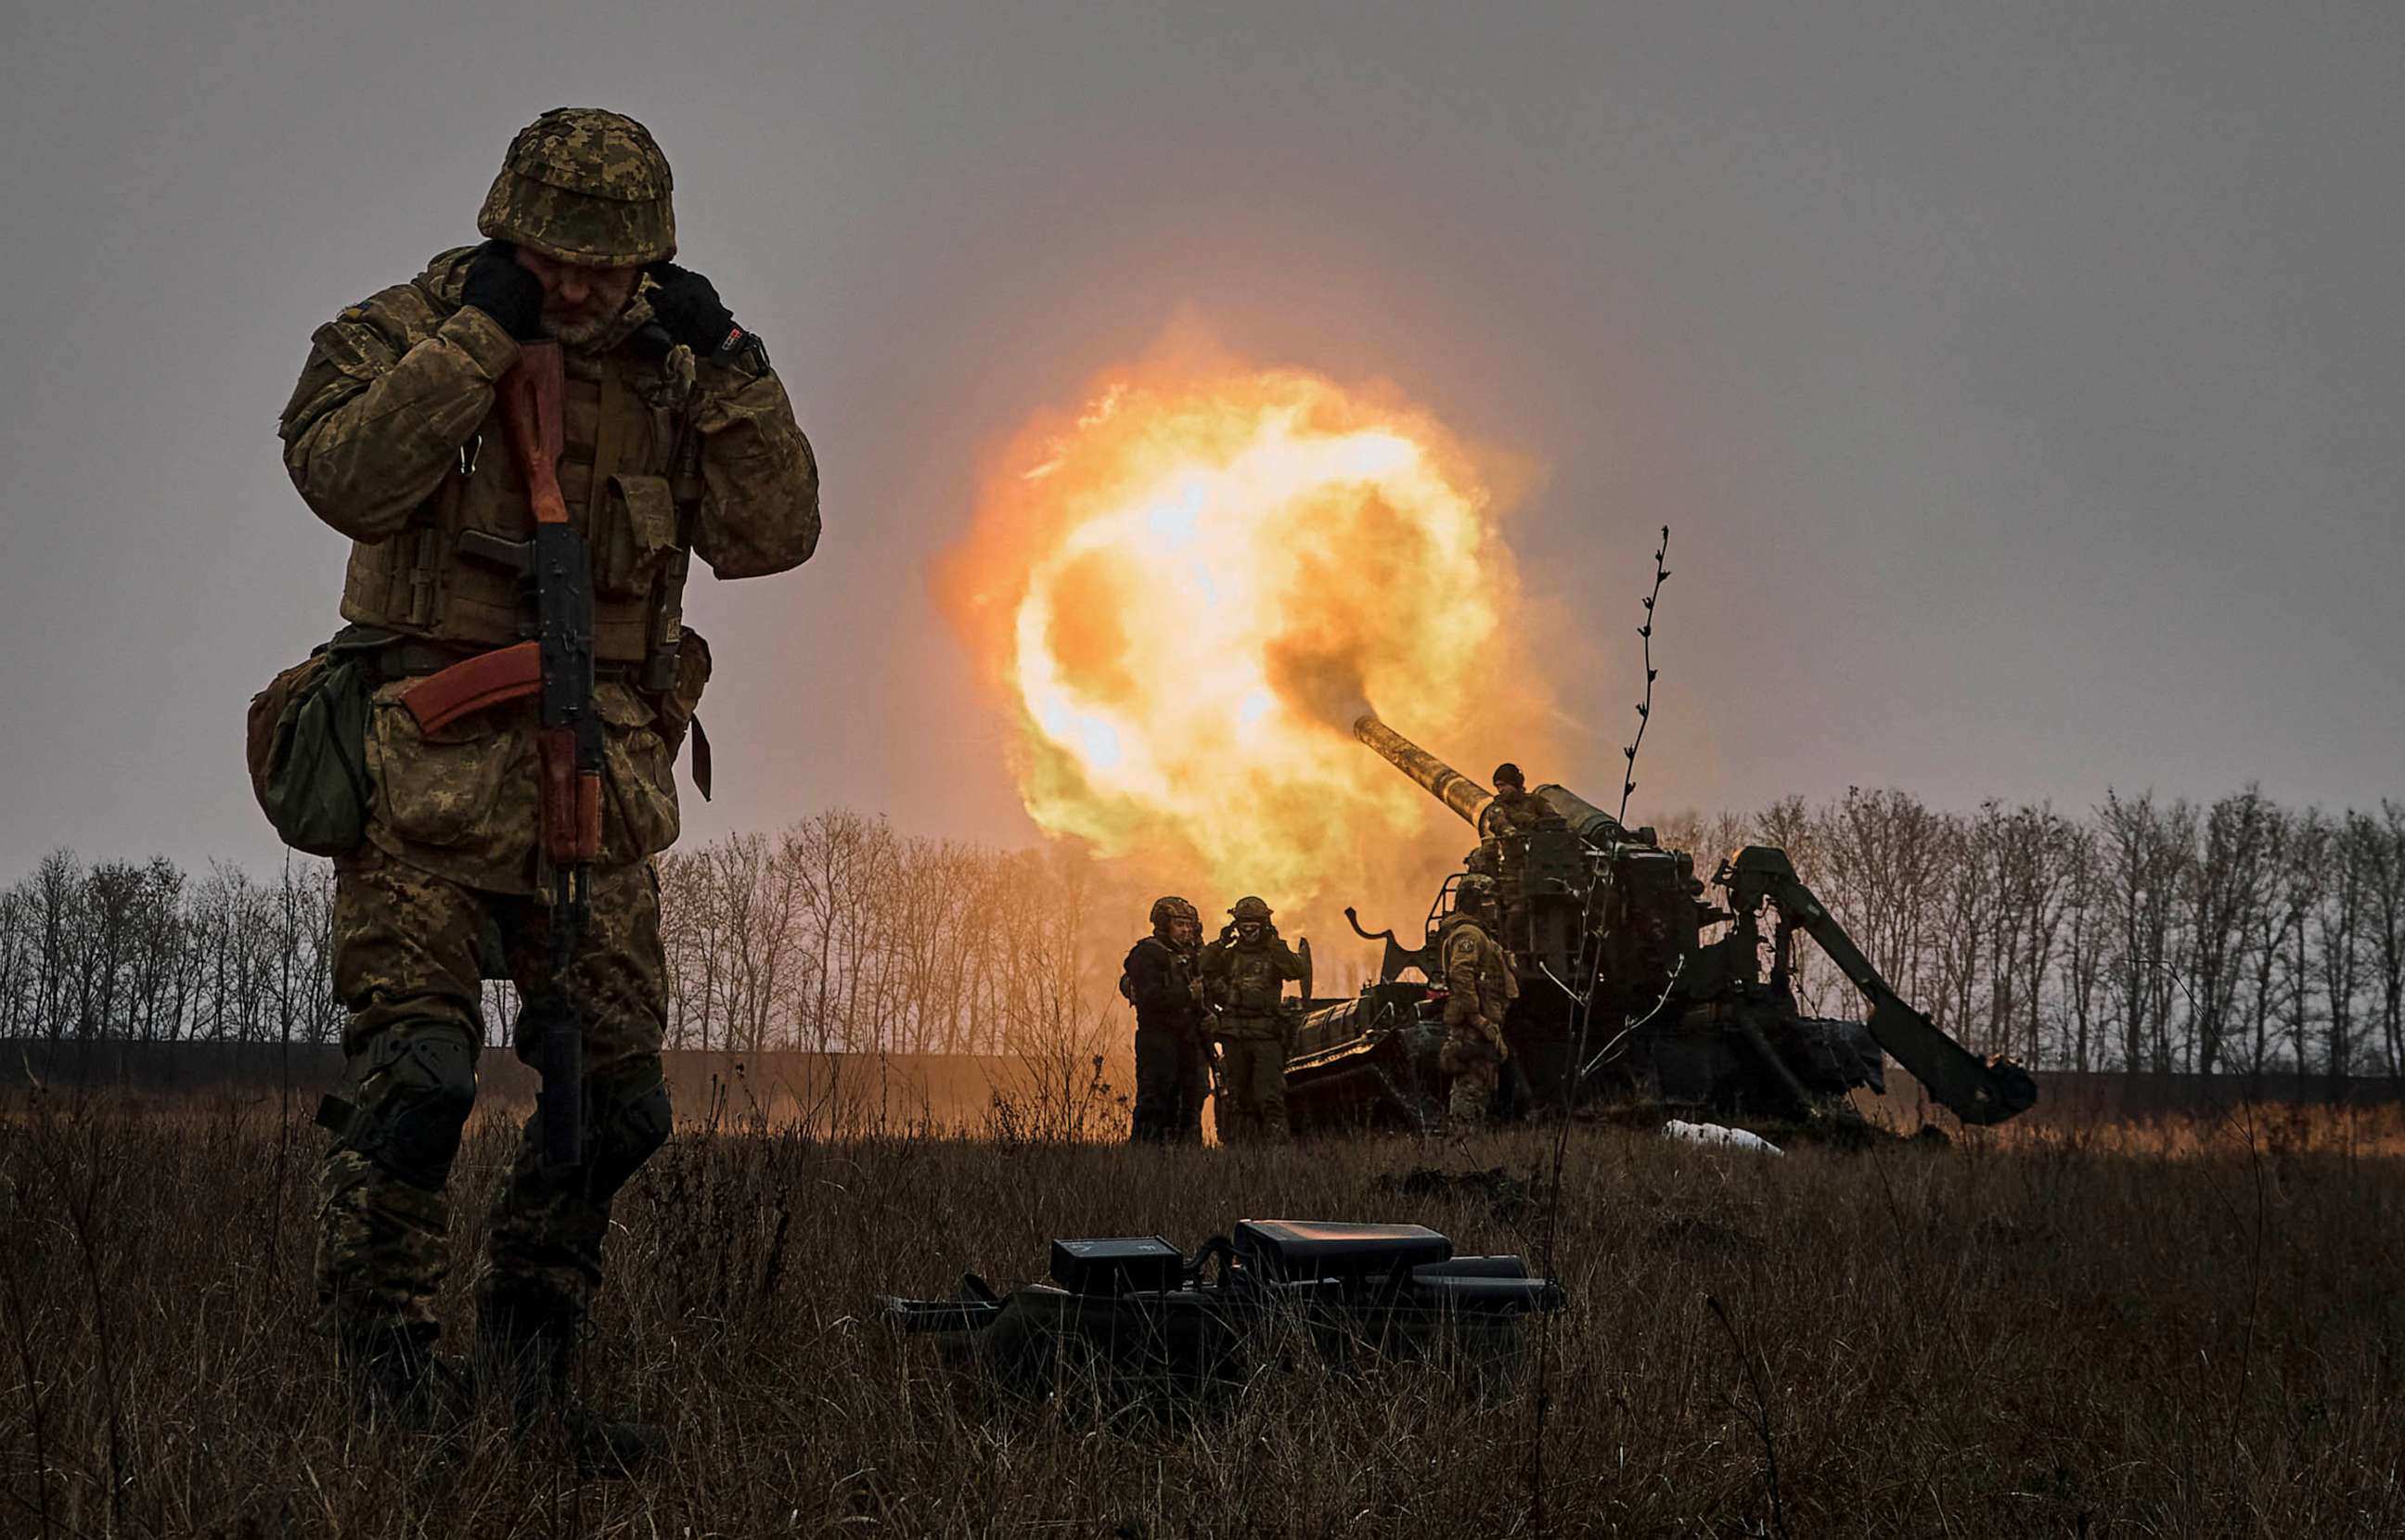 Nhóm binh sĩ Ukraine khai hỏa lựu pháo tự hành gần Bakhmut.